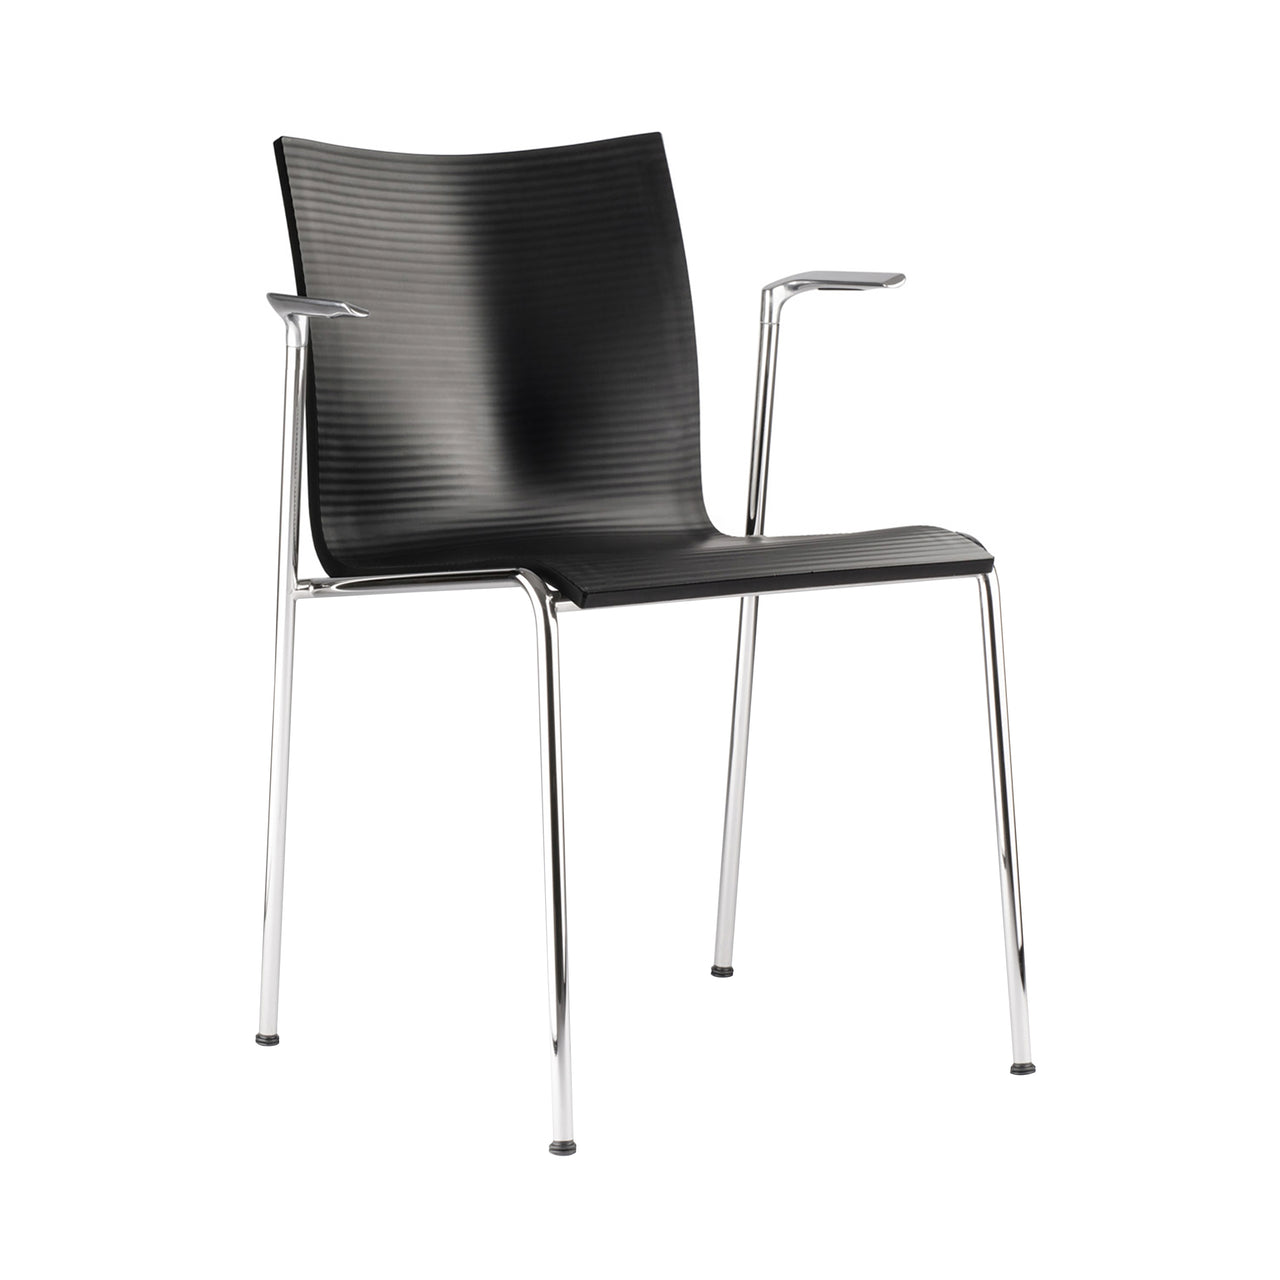 Chairik XL 123 Armchair: 4-Legs + Plastic + Black